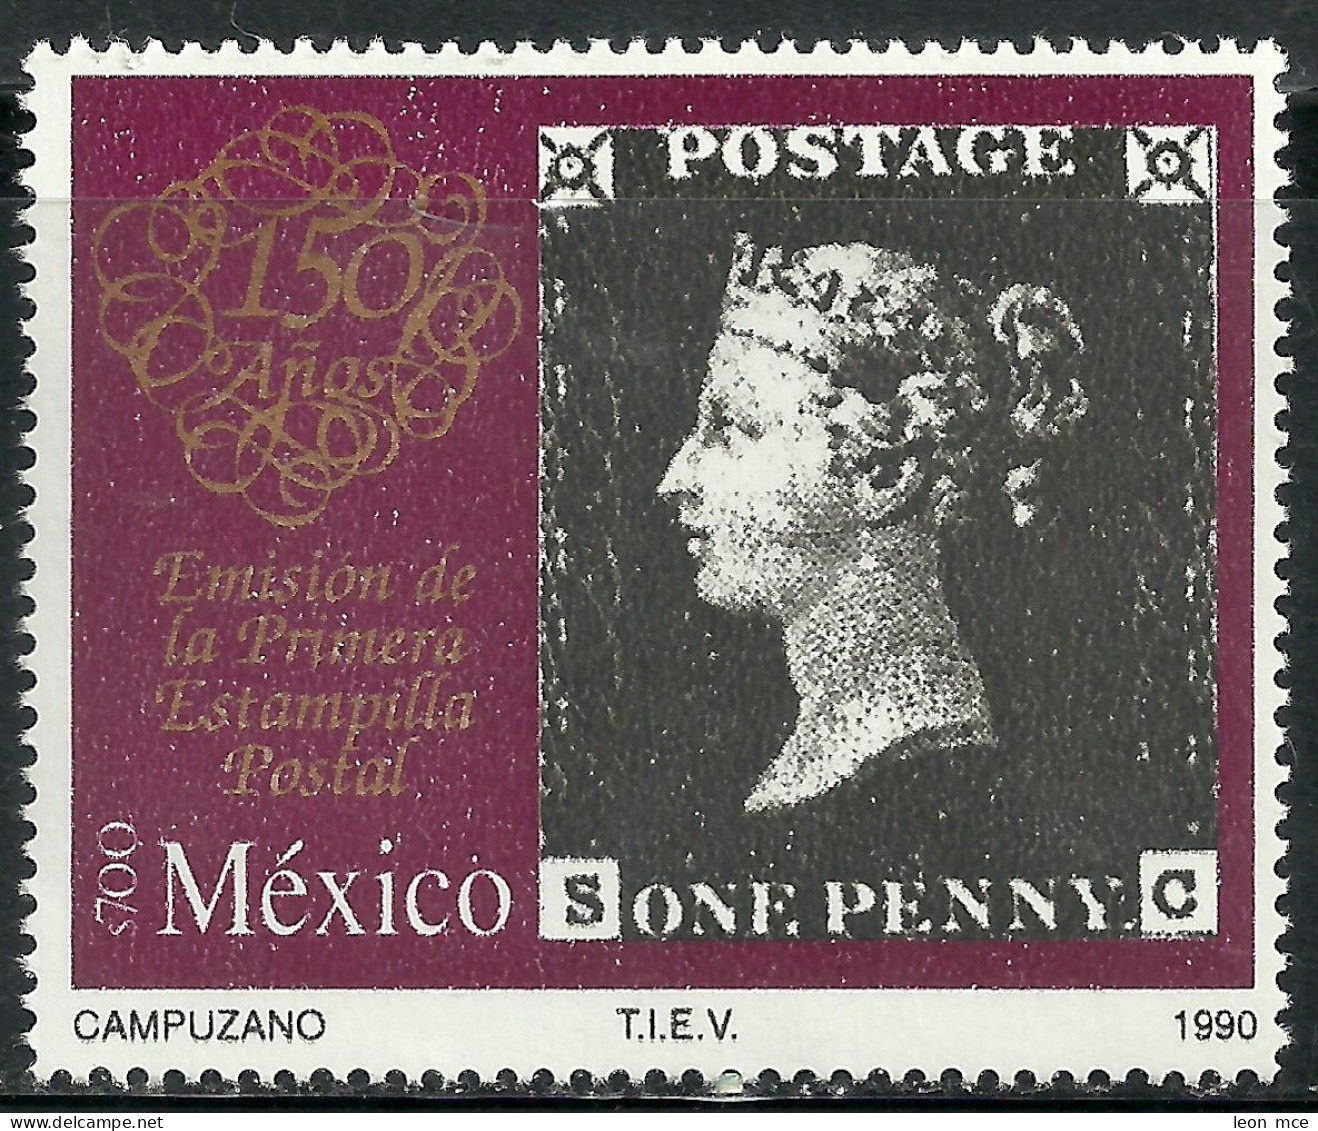 1990 MÉXICO PRIMERA ESTAMPILLA POSTAL ONE PENNY Sc. 1645 MNH FIRST POSTAGE STAMPS 150th. ANNIV. - Mexico